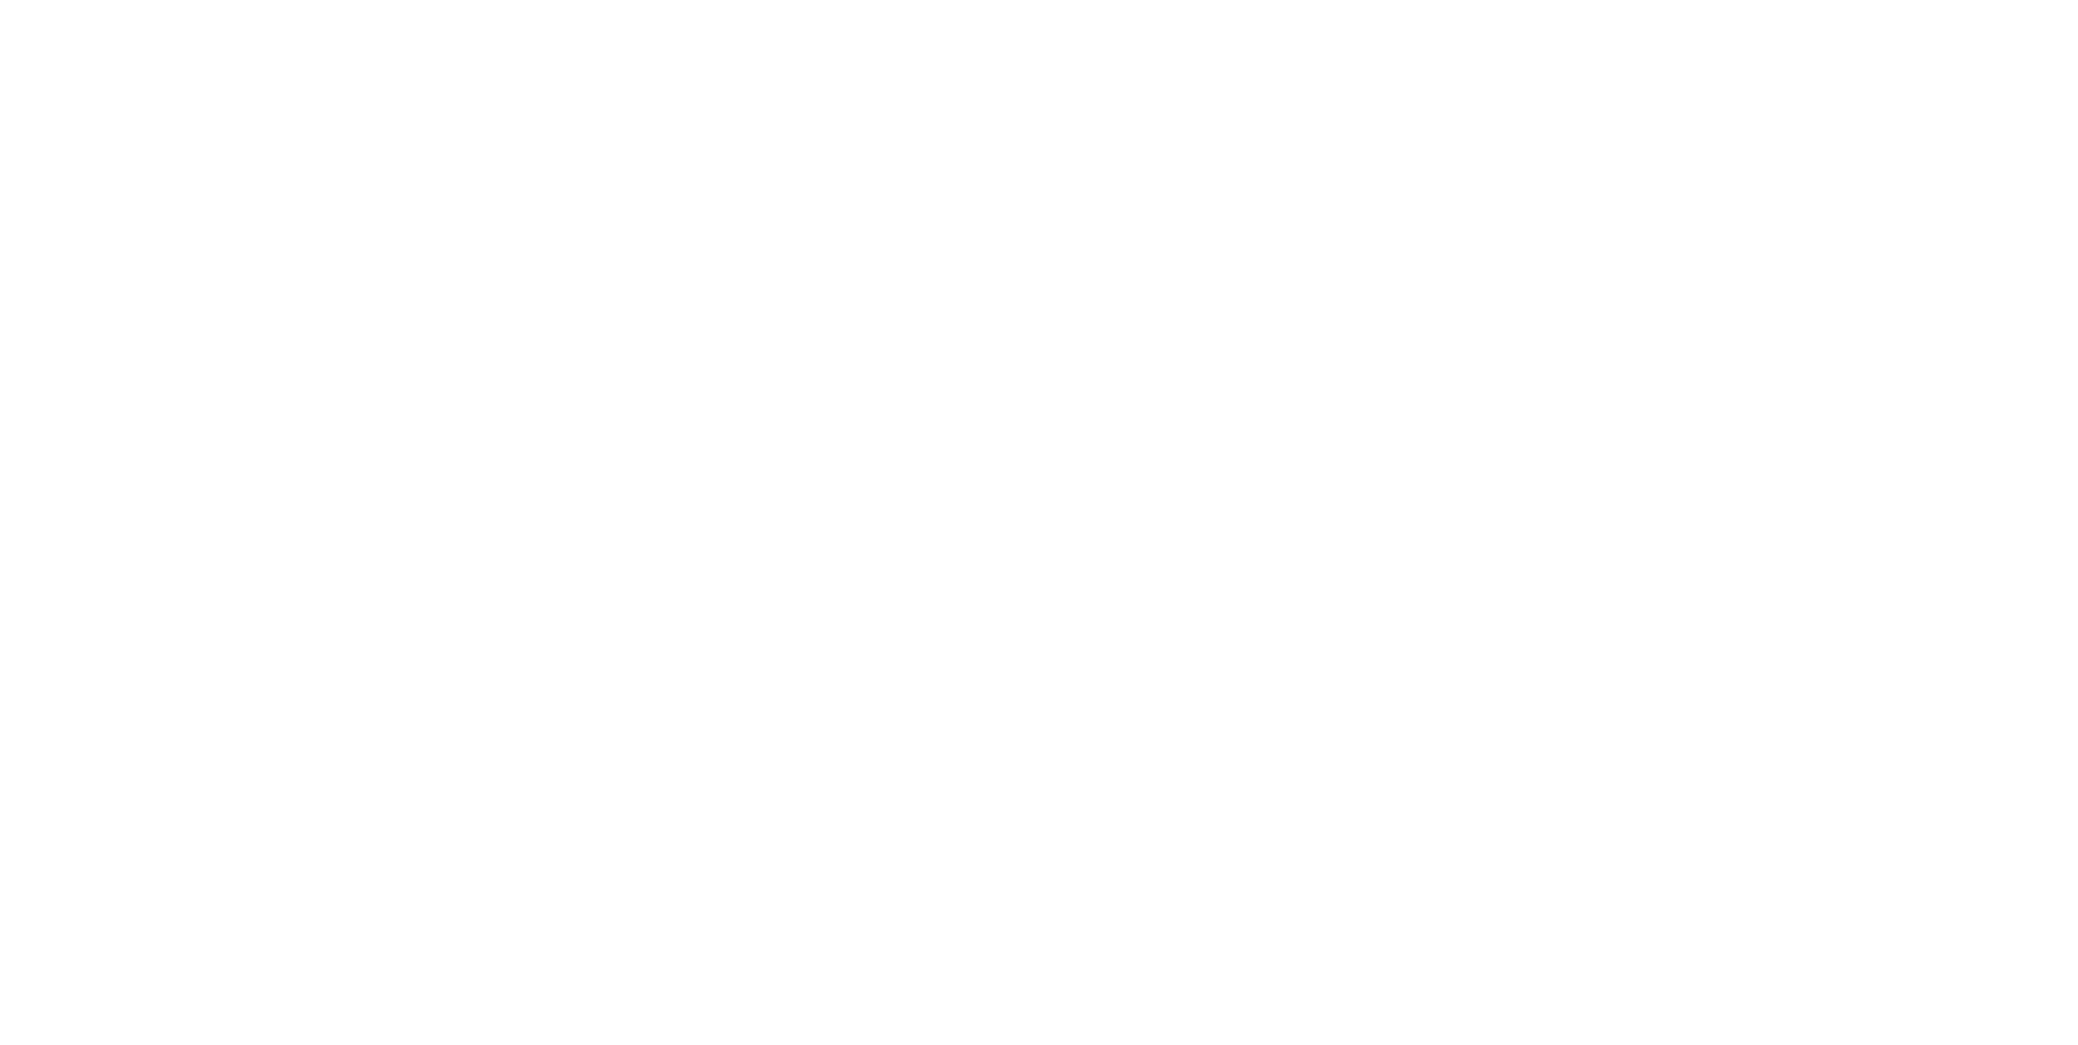 Vigne Centro Sardegna